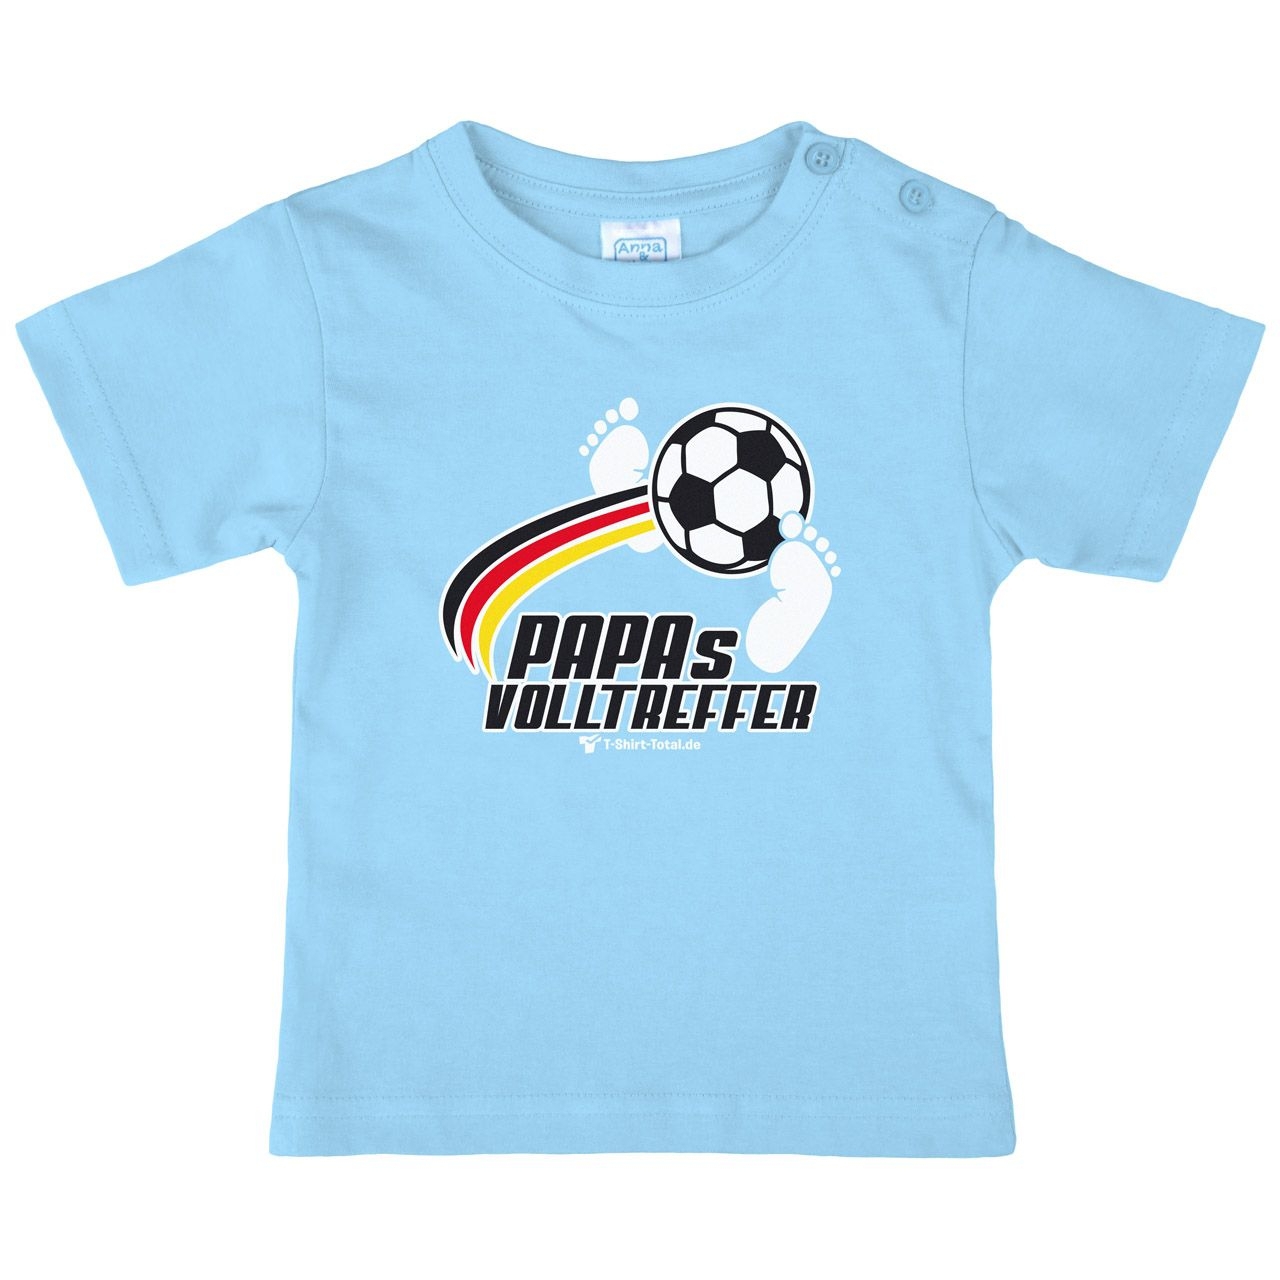 Papas Volltreffer Kinder T-Shirt hellblau 56 / 62